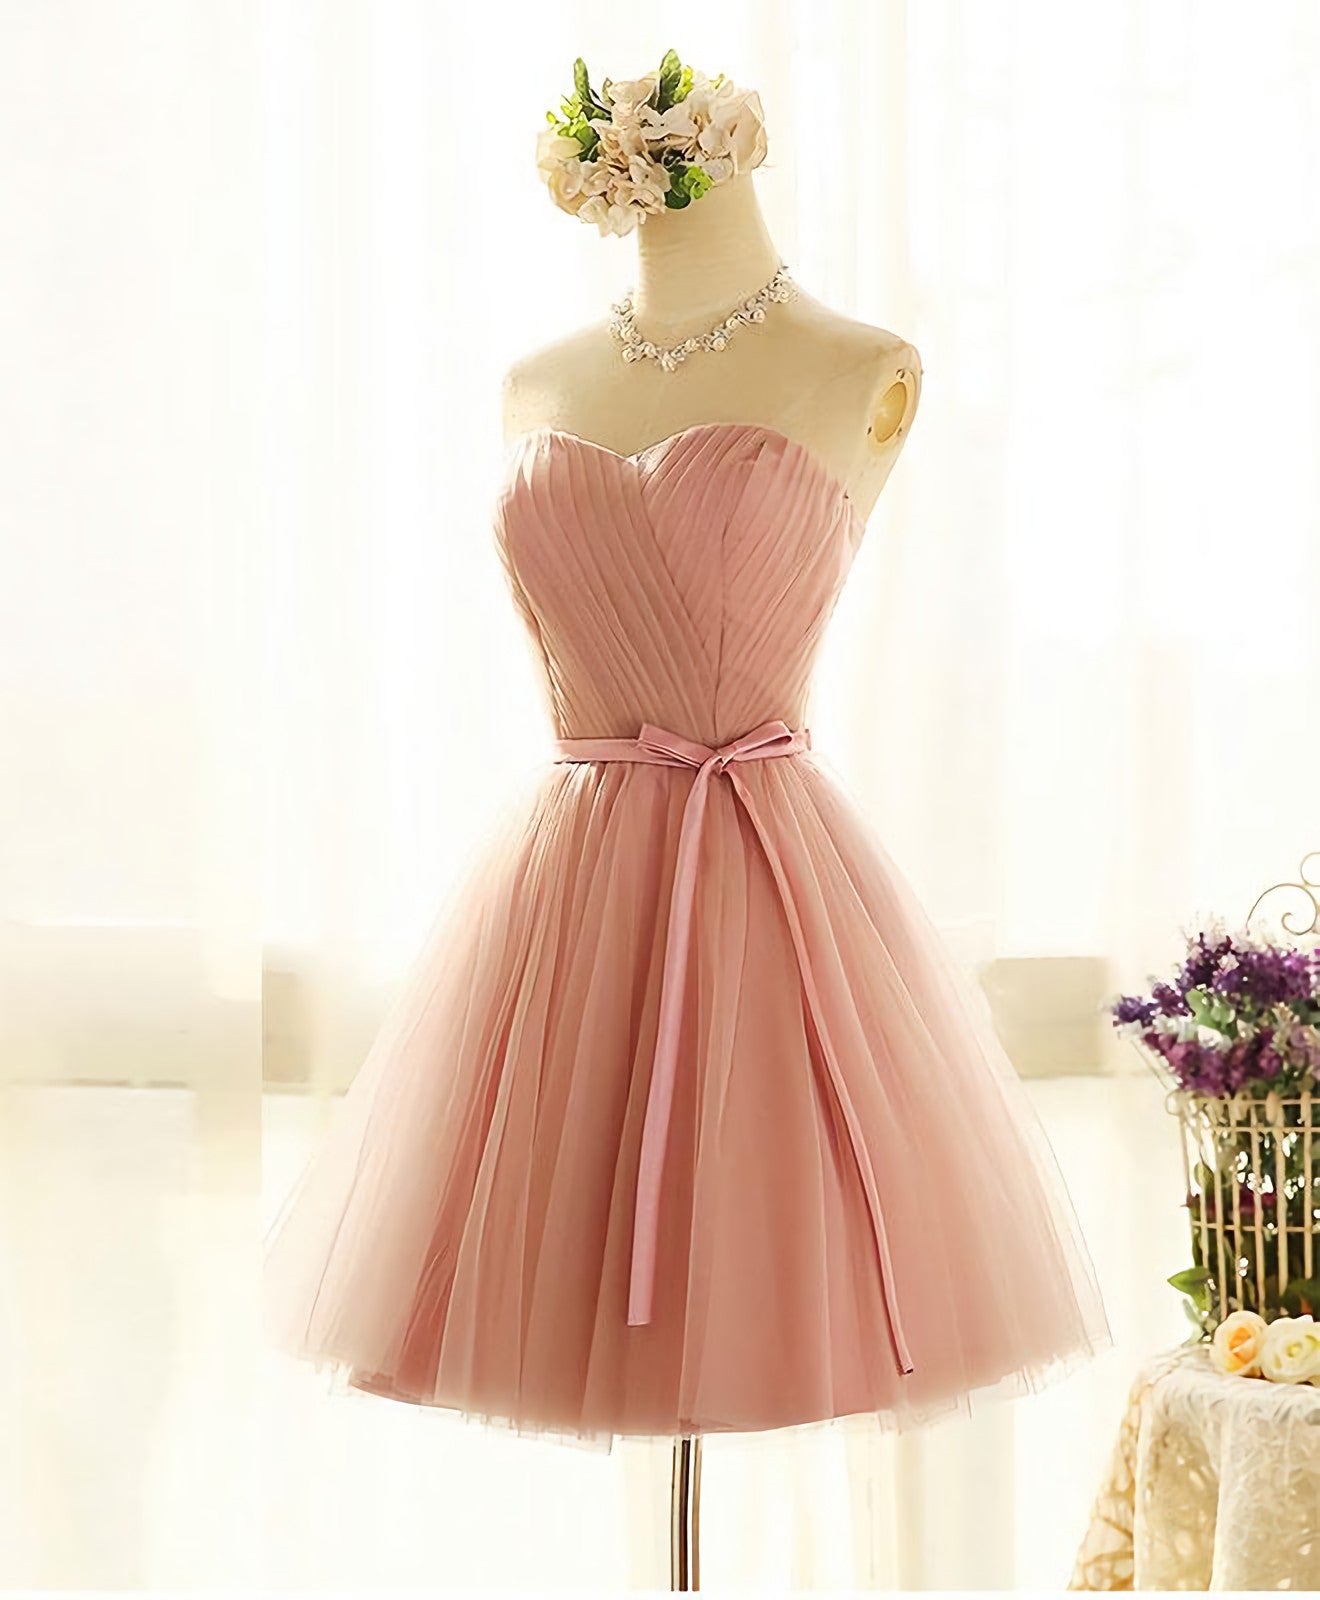 Cute Sweetheart Neck Tulle Short Corset Prom Dress, Corset Bridesmaid Dress outfit, Black Long Dress